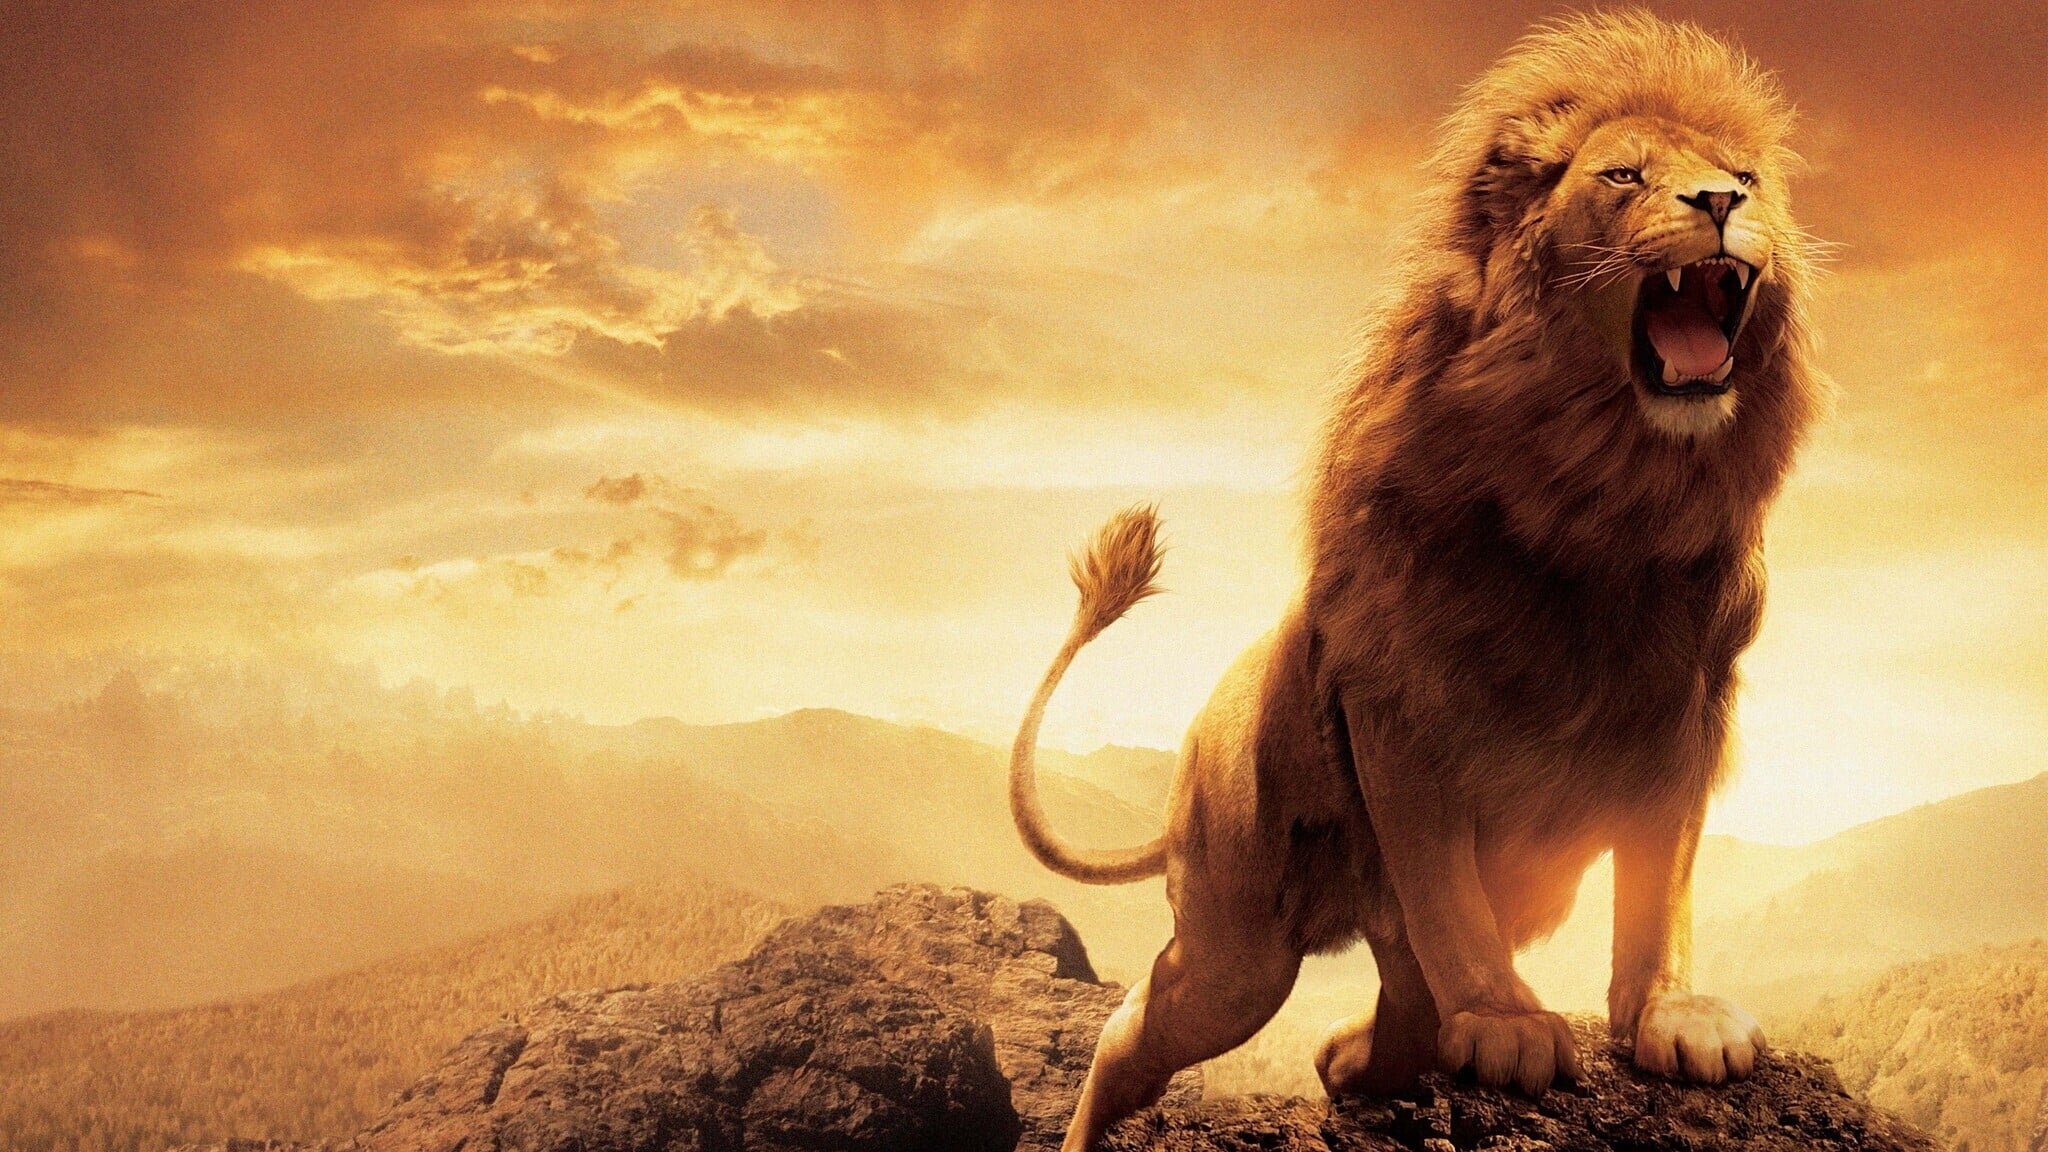 Narnia - Løven, heksen og garderobeskabet (2005)